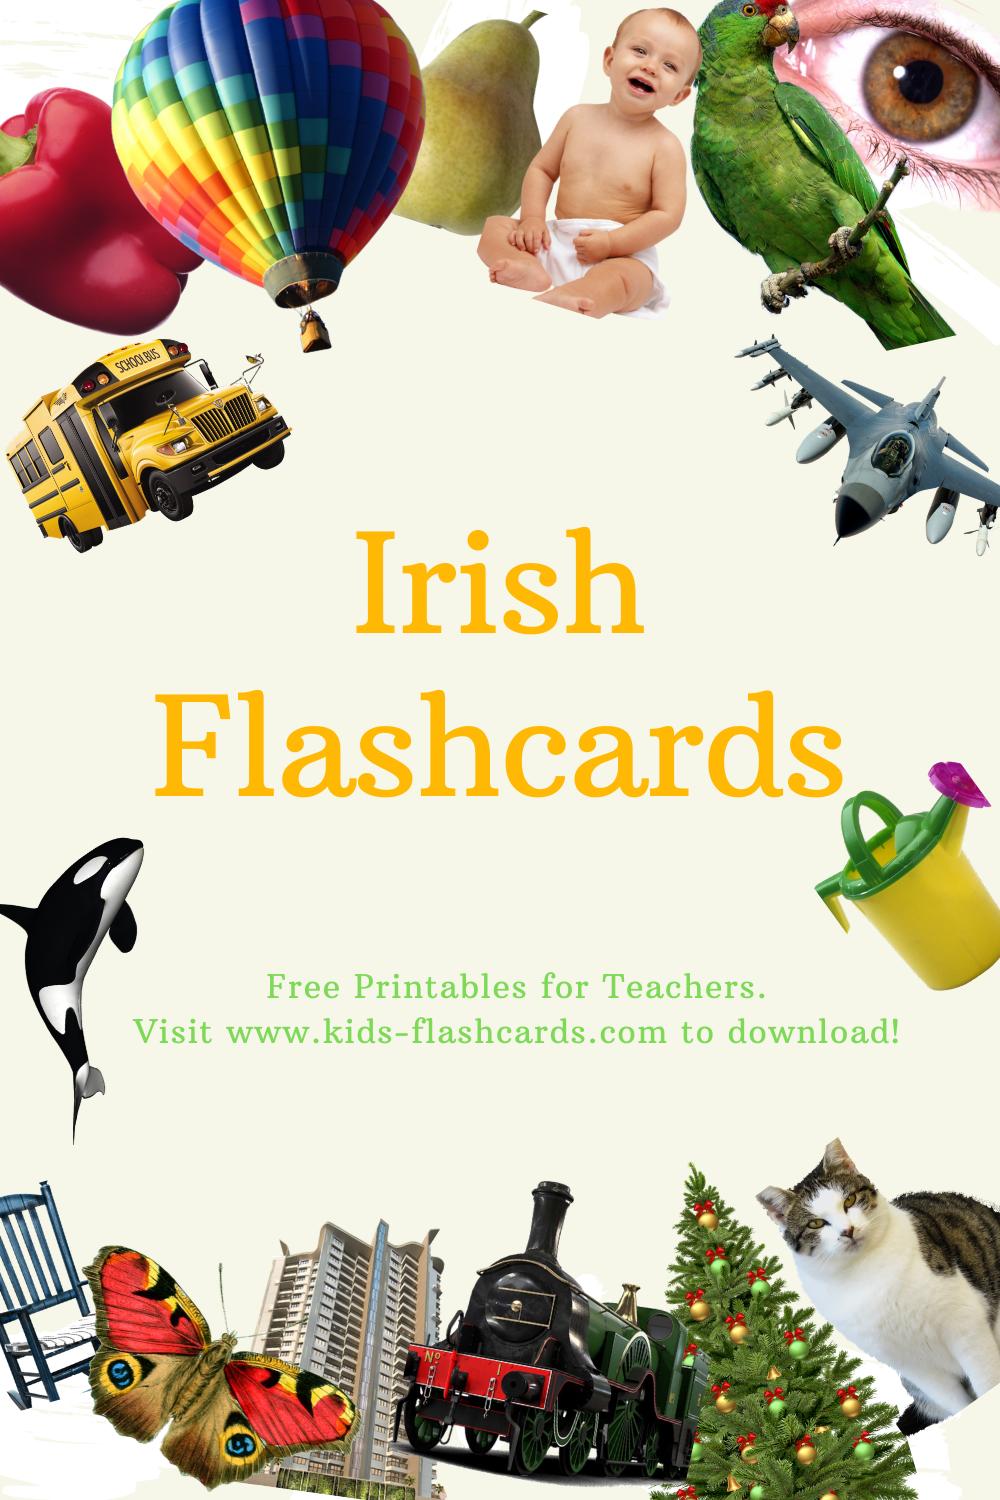 Worksheets to learn Irish language